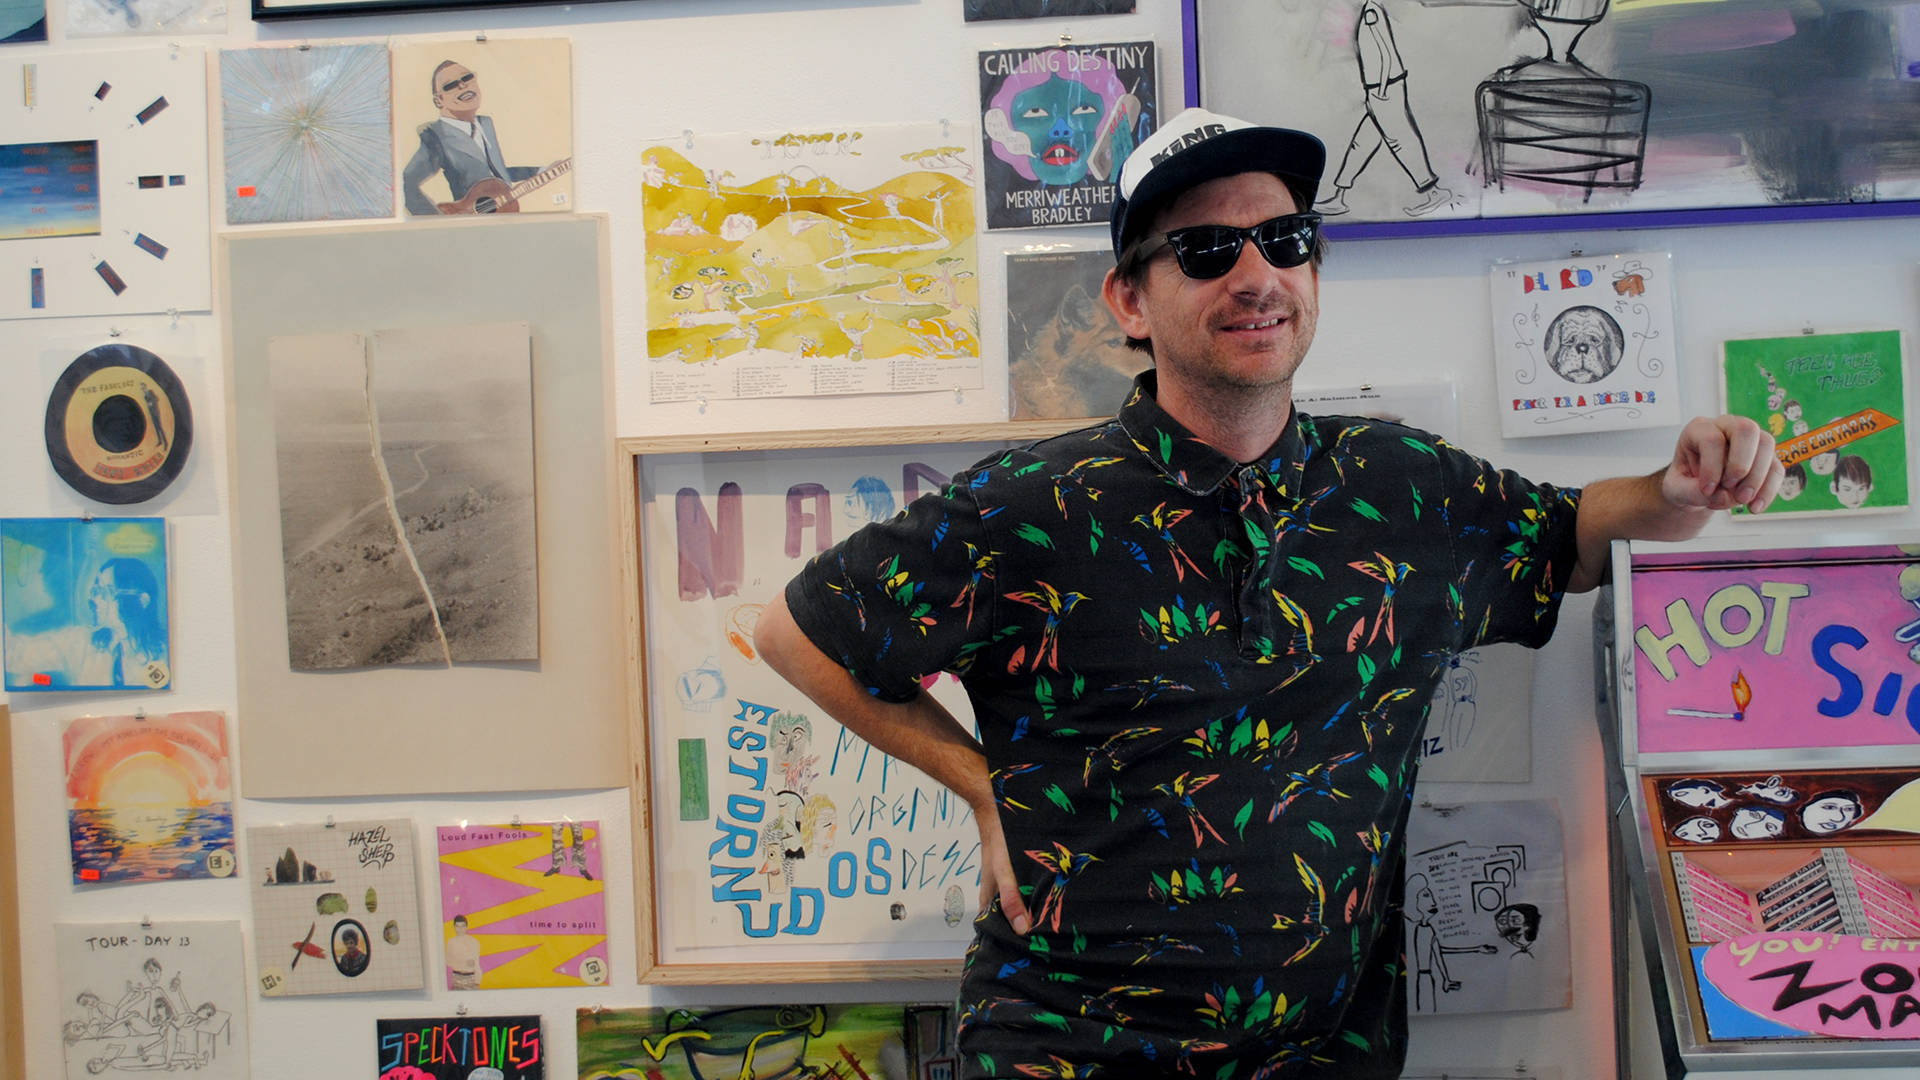 San Francisco indie rock vet Sonny Smith reimagines bizarre tour experiences as a hero's journey in his new exhibition at Gallery 16. Nastia Voynovskaya